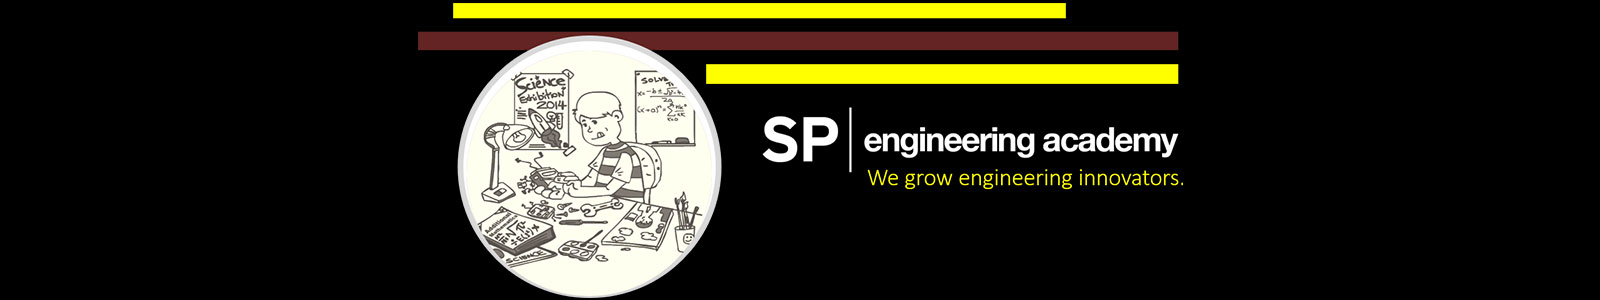 Engineering-Academy-web-banner